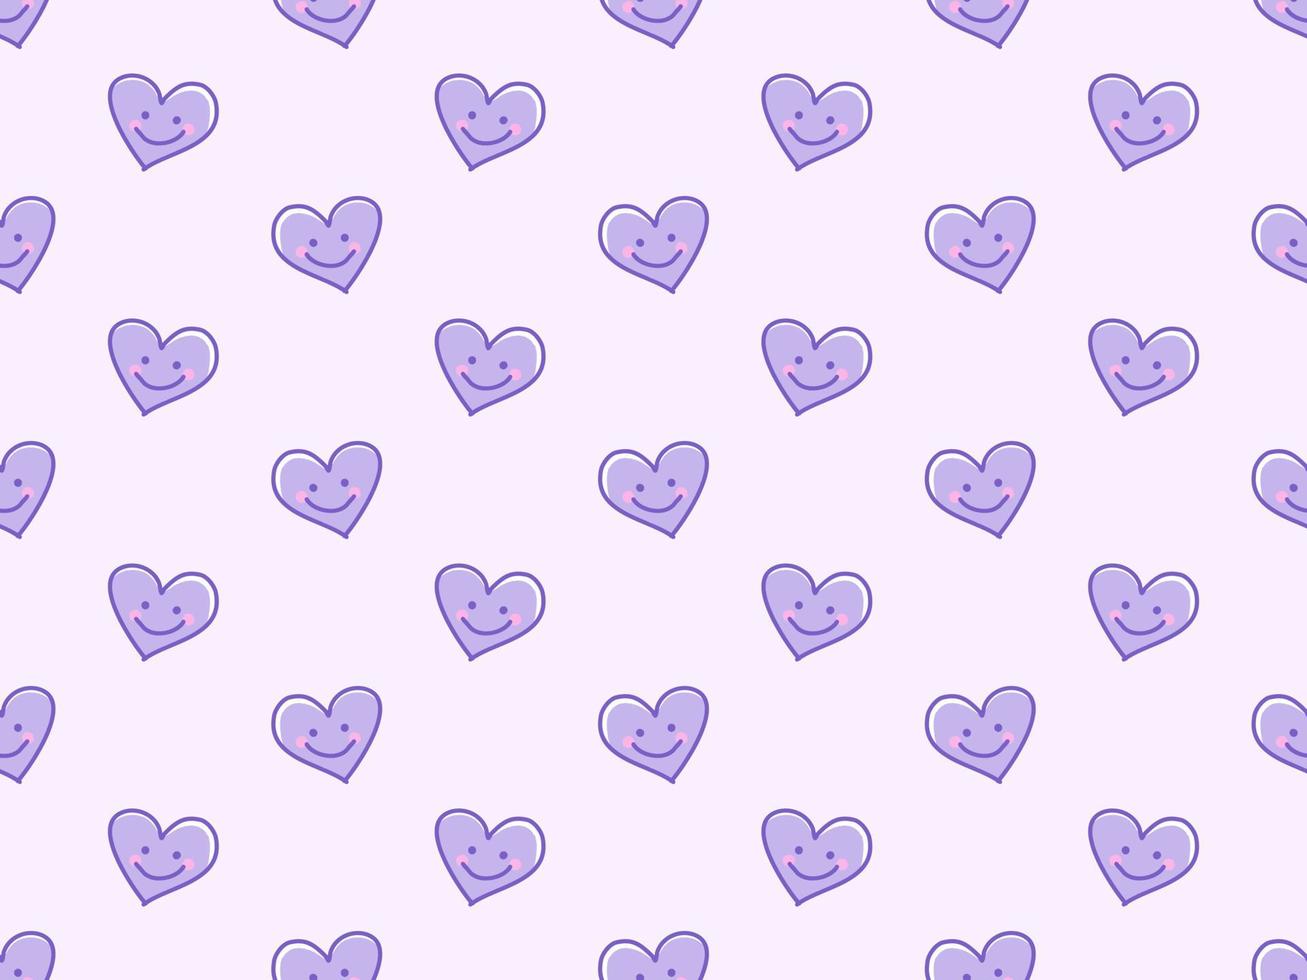 Heart cartoon character seamless pattern on purple background 9571117 ...